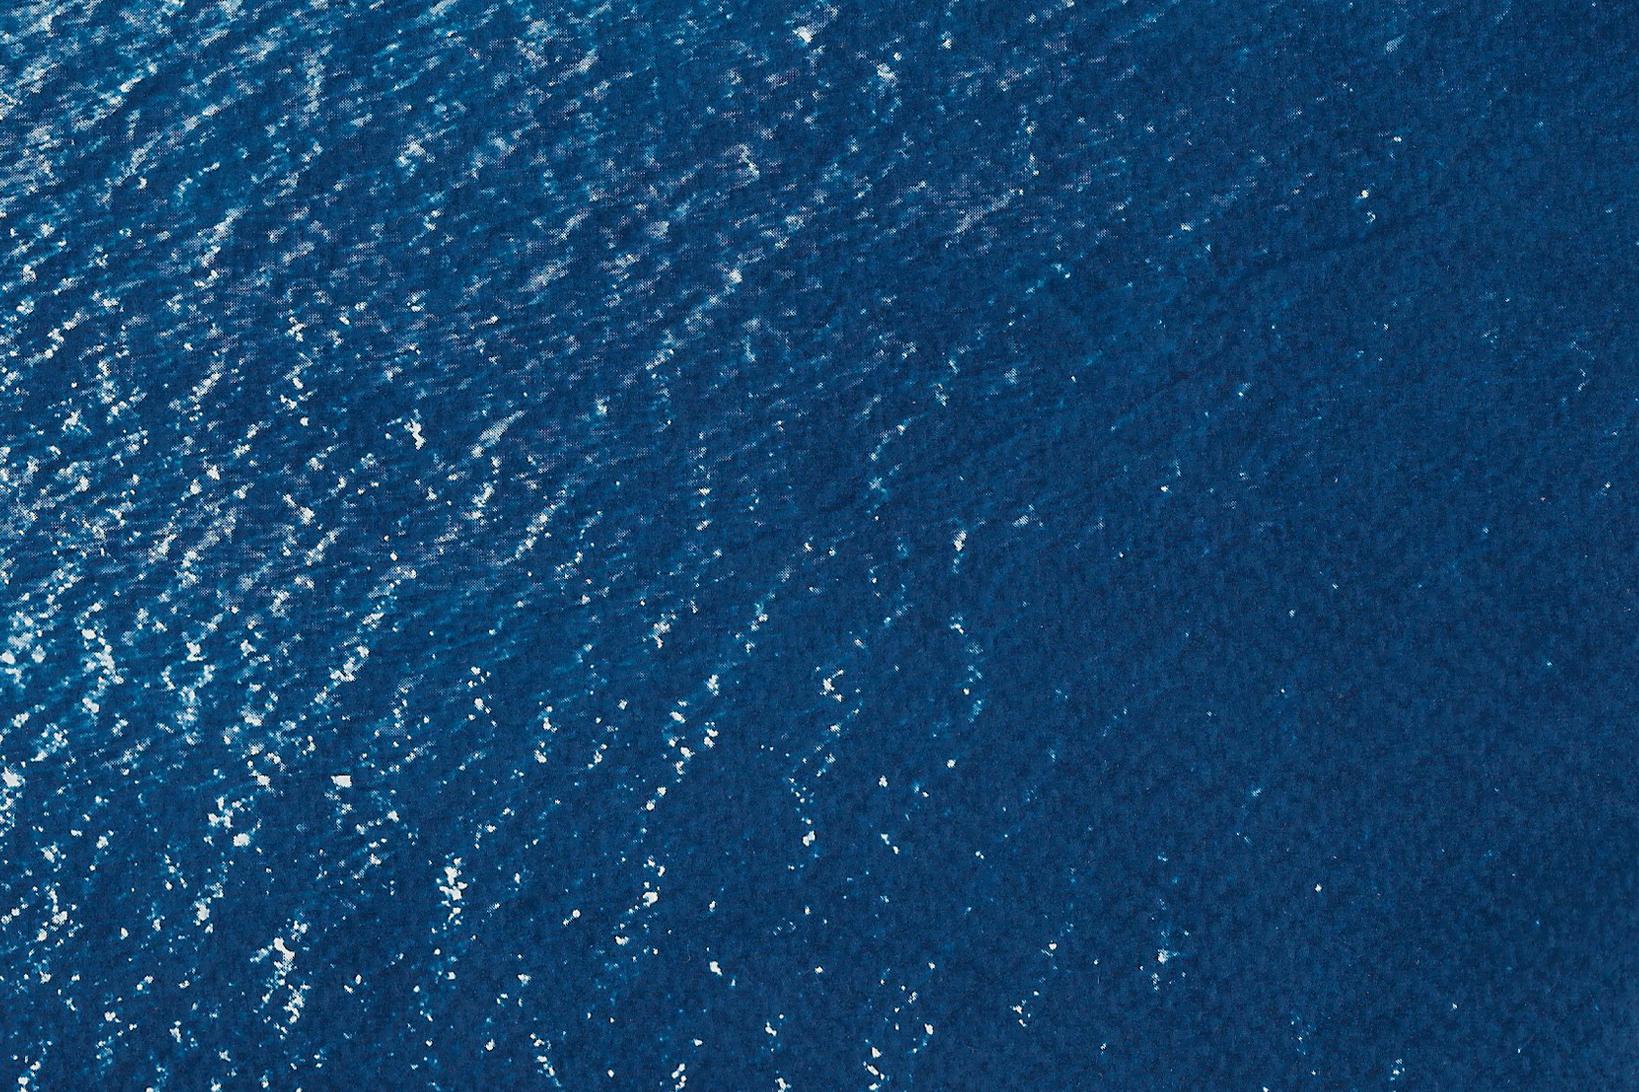 Nautical Diptych of Smooth Bay in the Mediterranean, Zen Waters Cyanotype, Paper 1